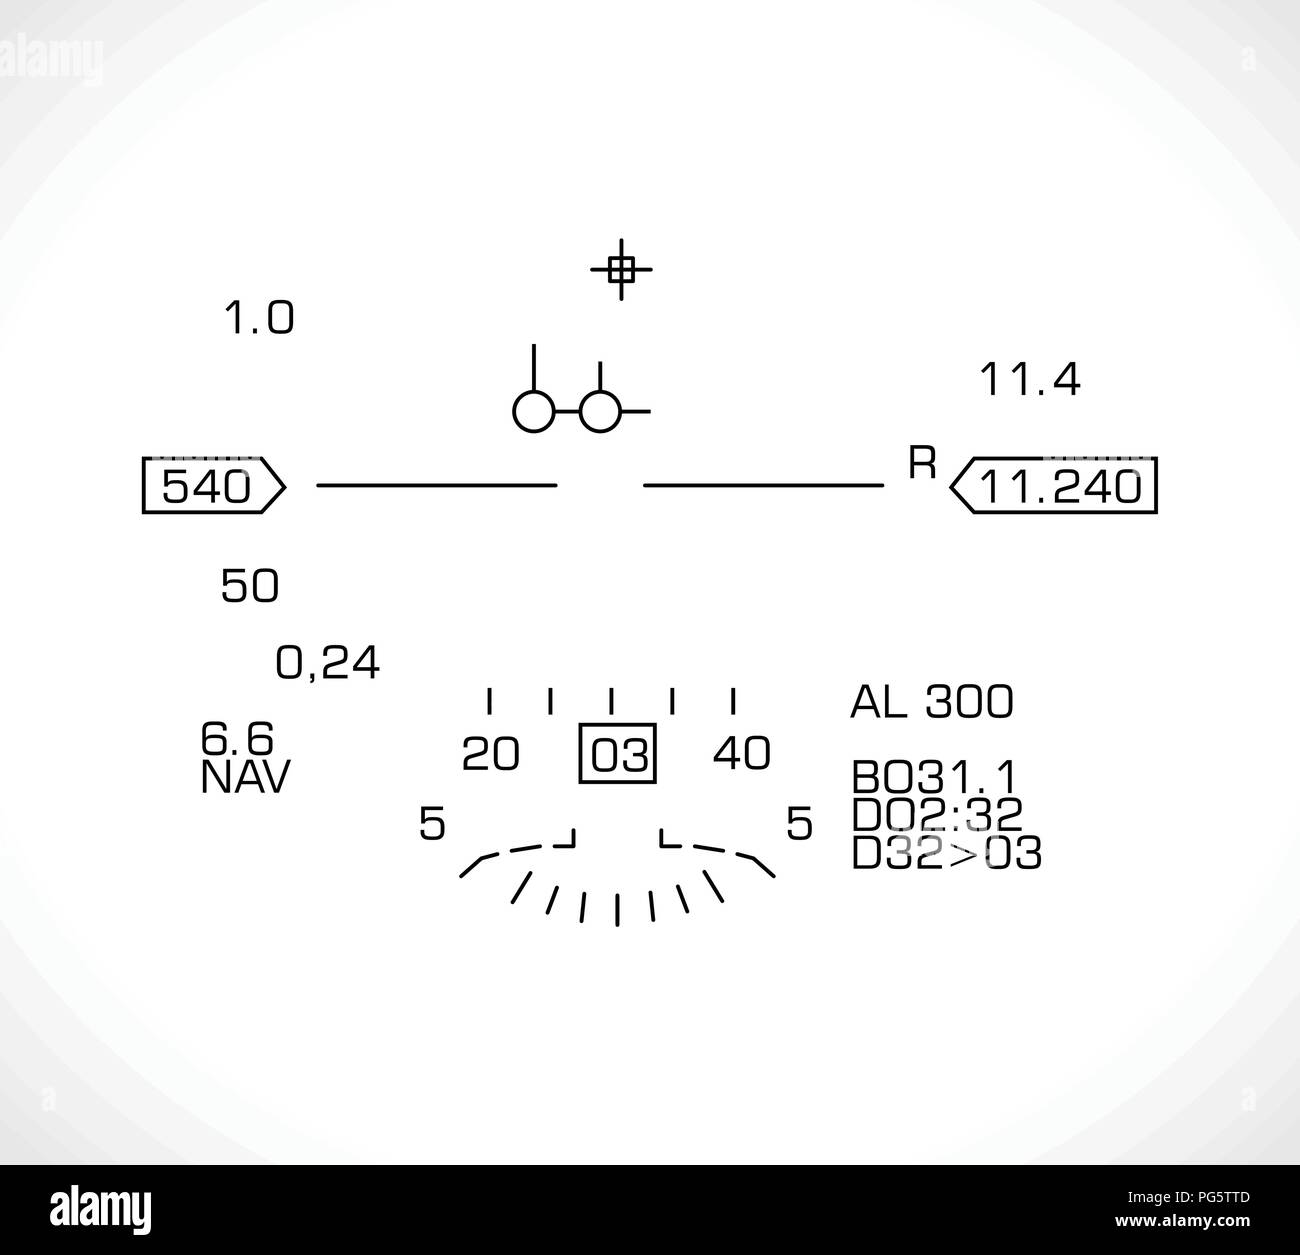 HUD display - jet fighter flight nawigation system Stock Vector